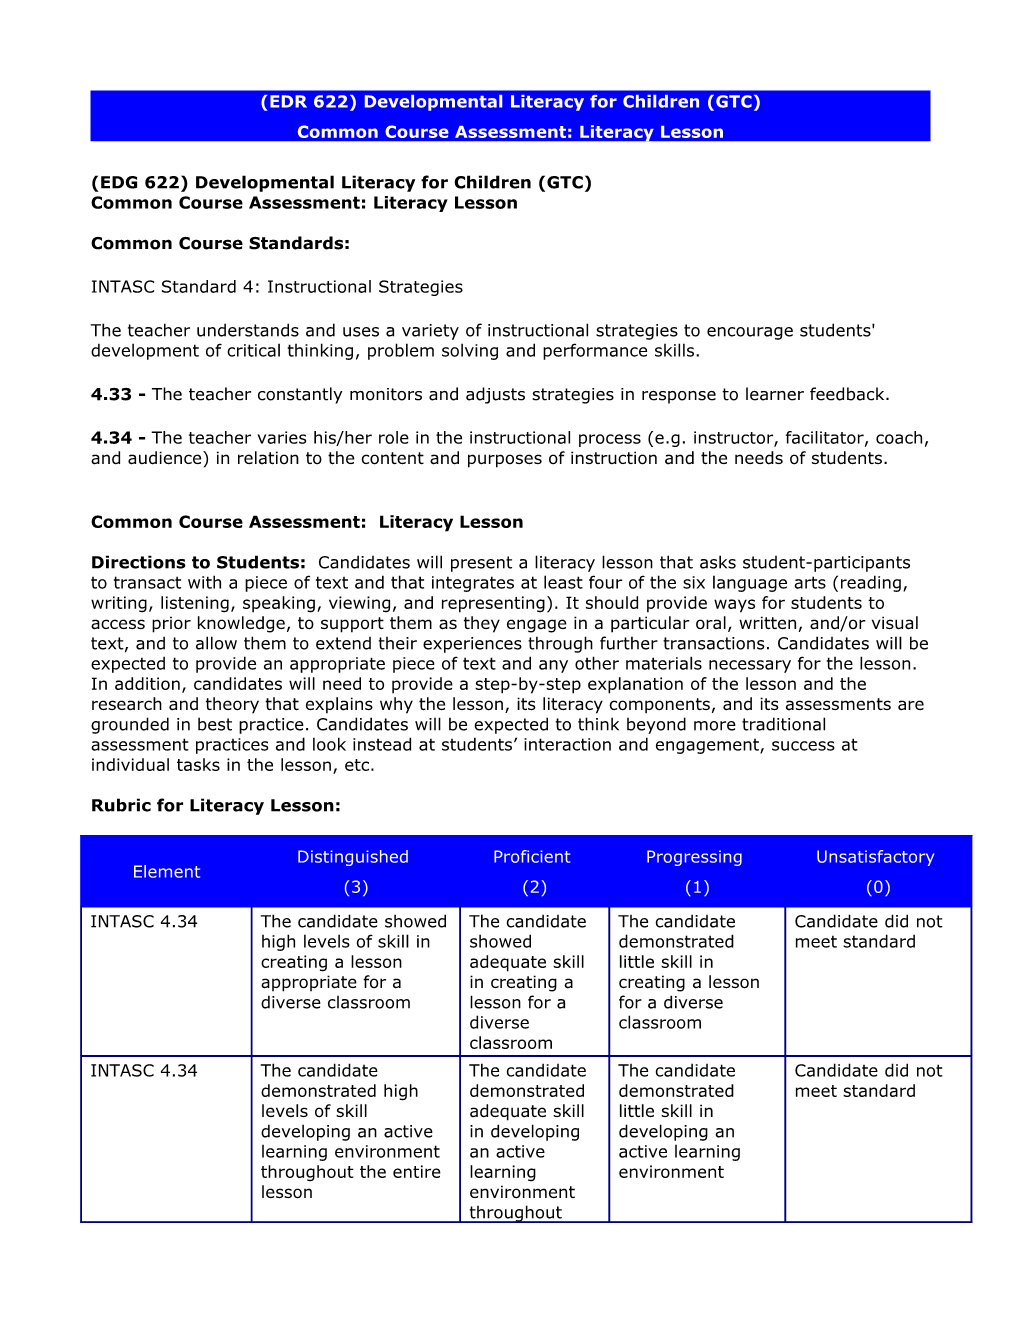 (EDR 622) Common Course Assessment